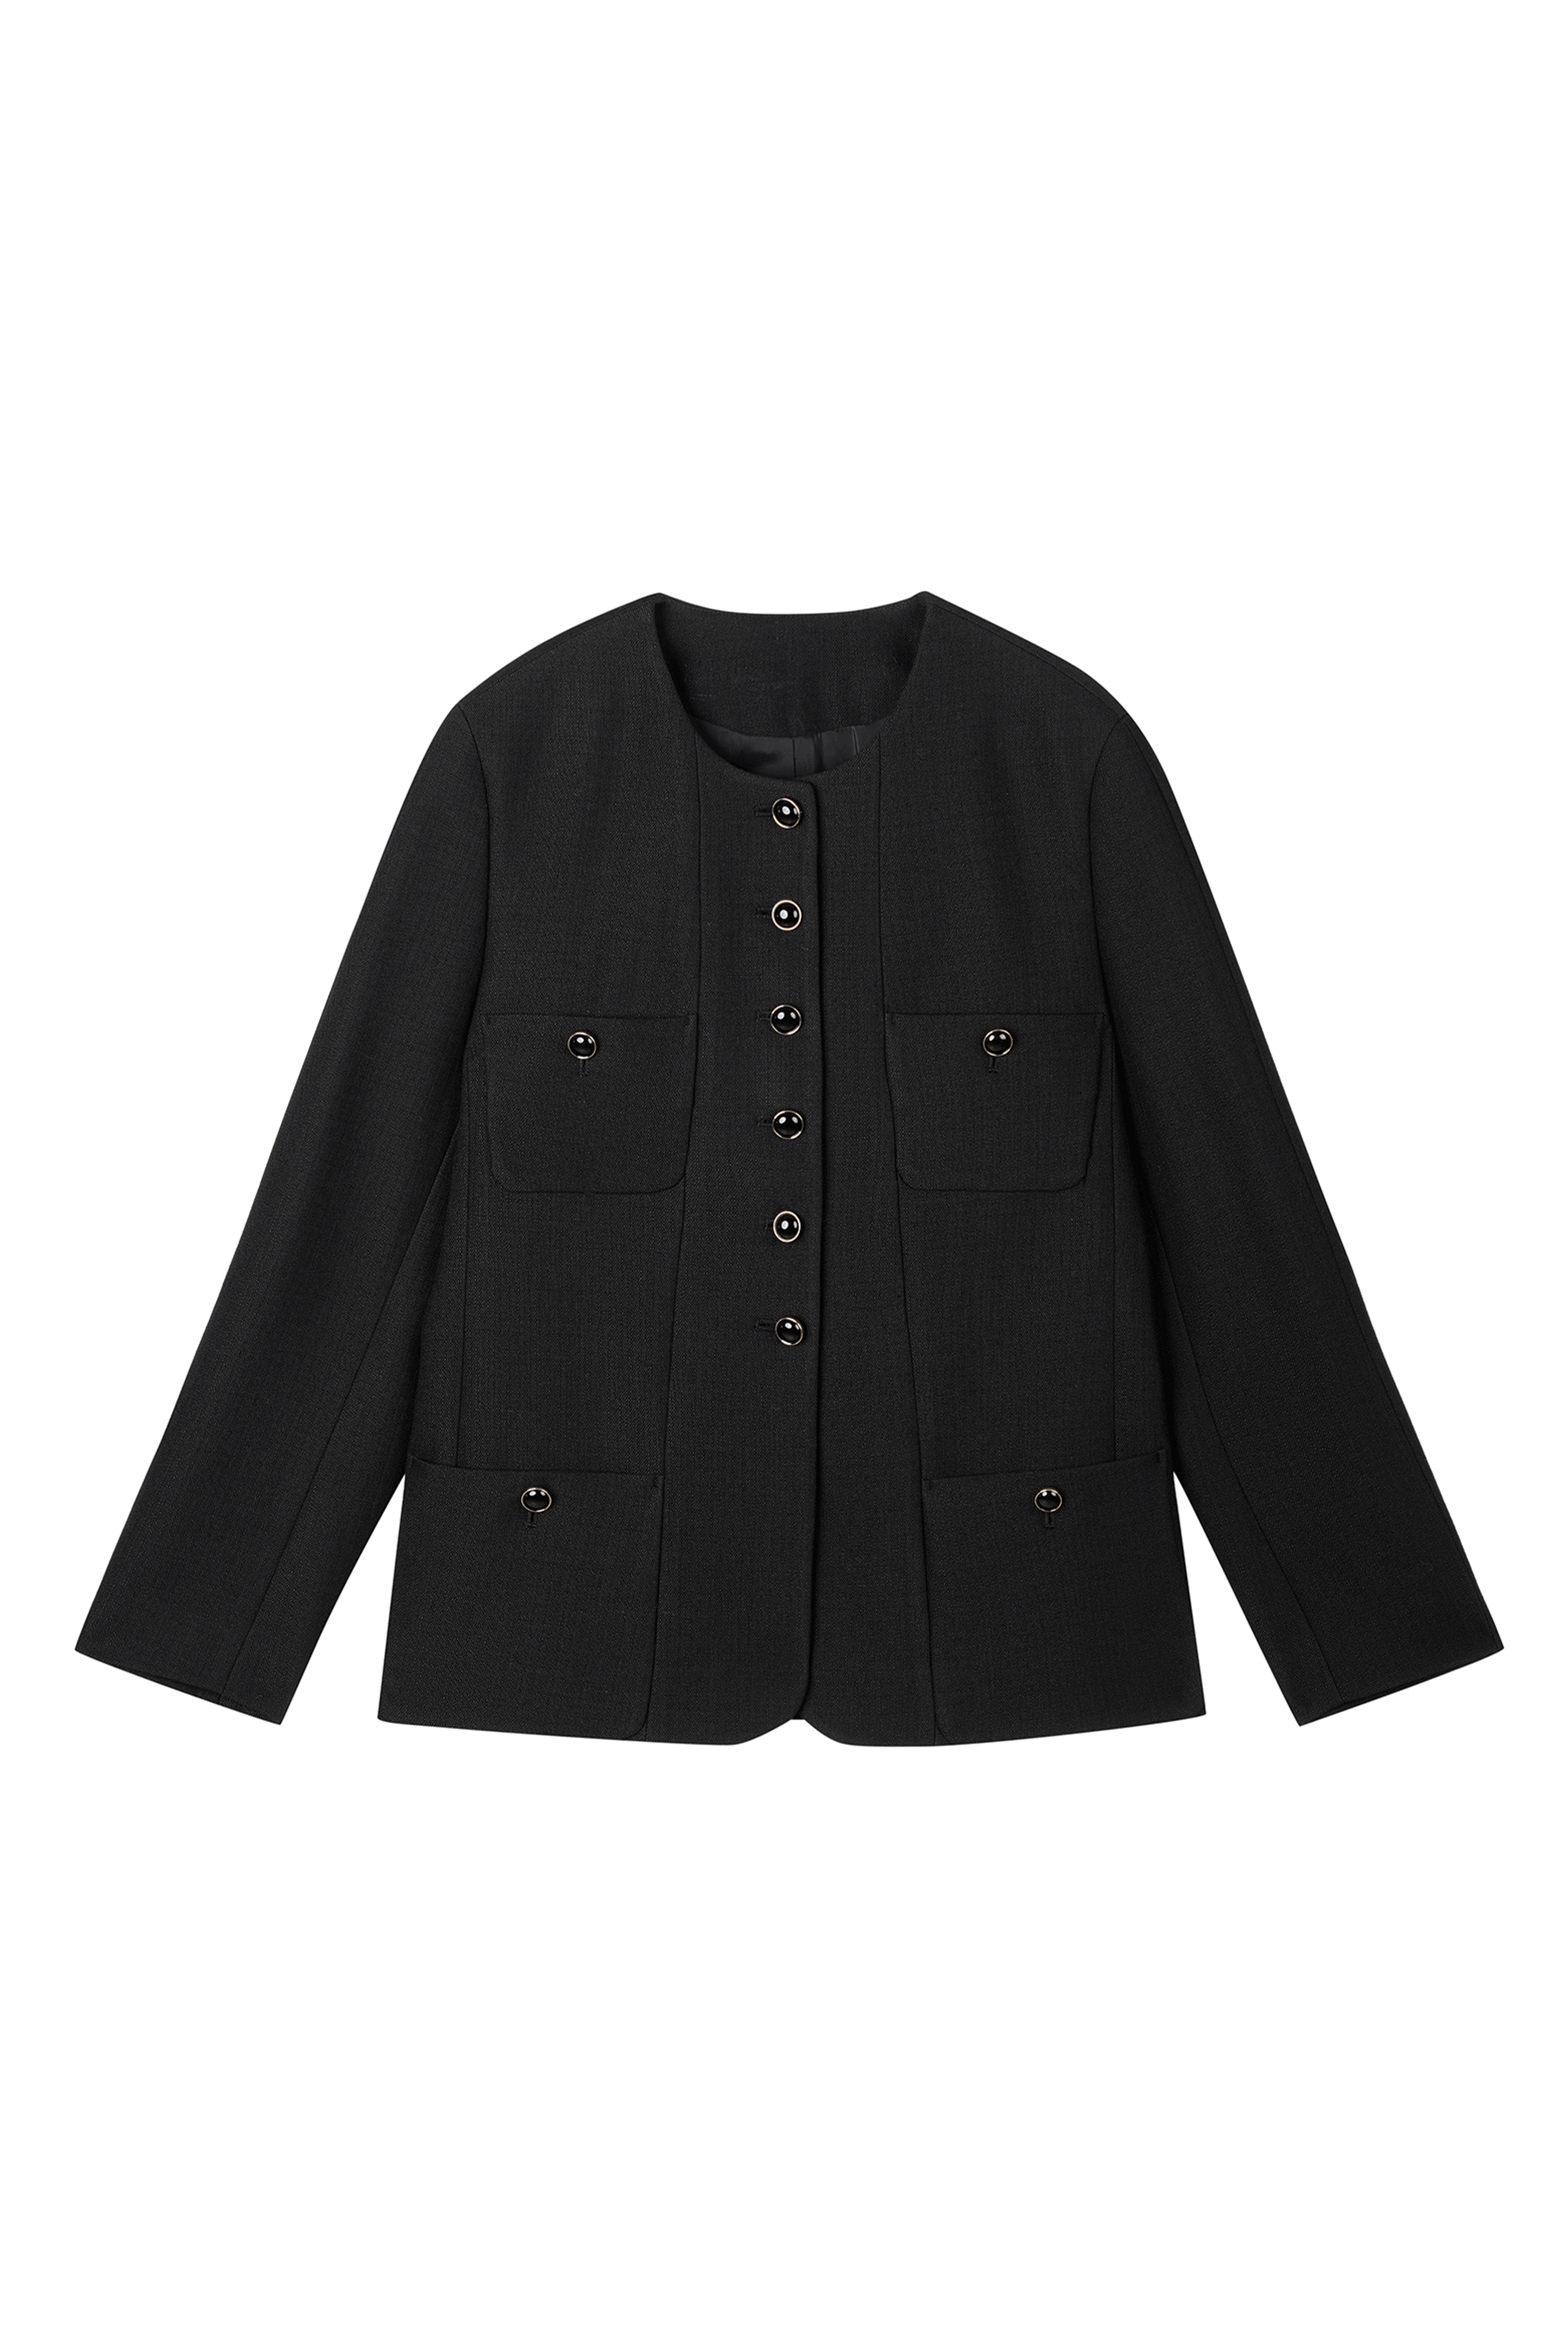 2nd) Amour Tweed Jacket